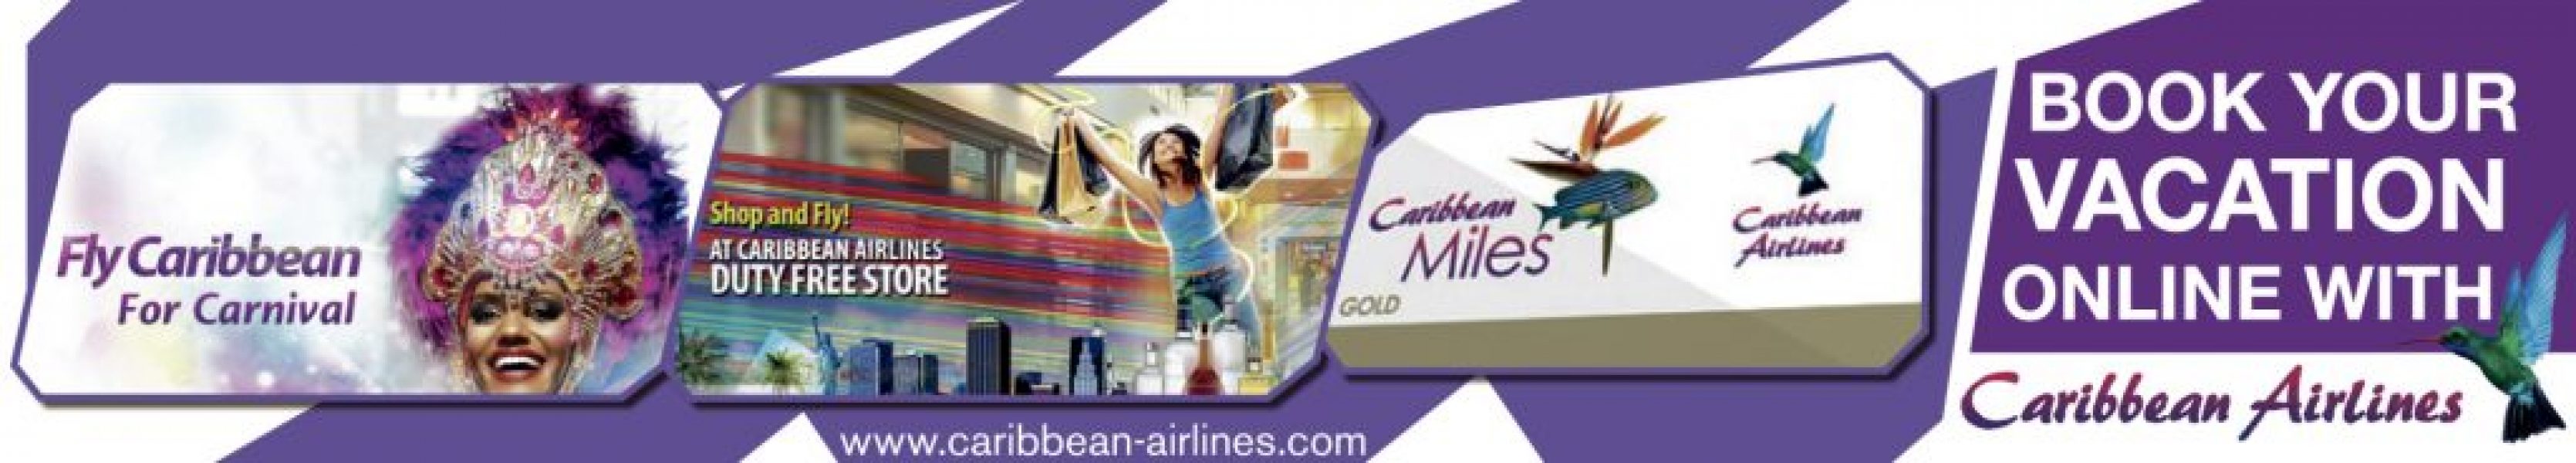 Caribbean Airlines Print